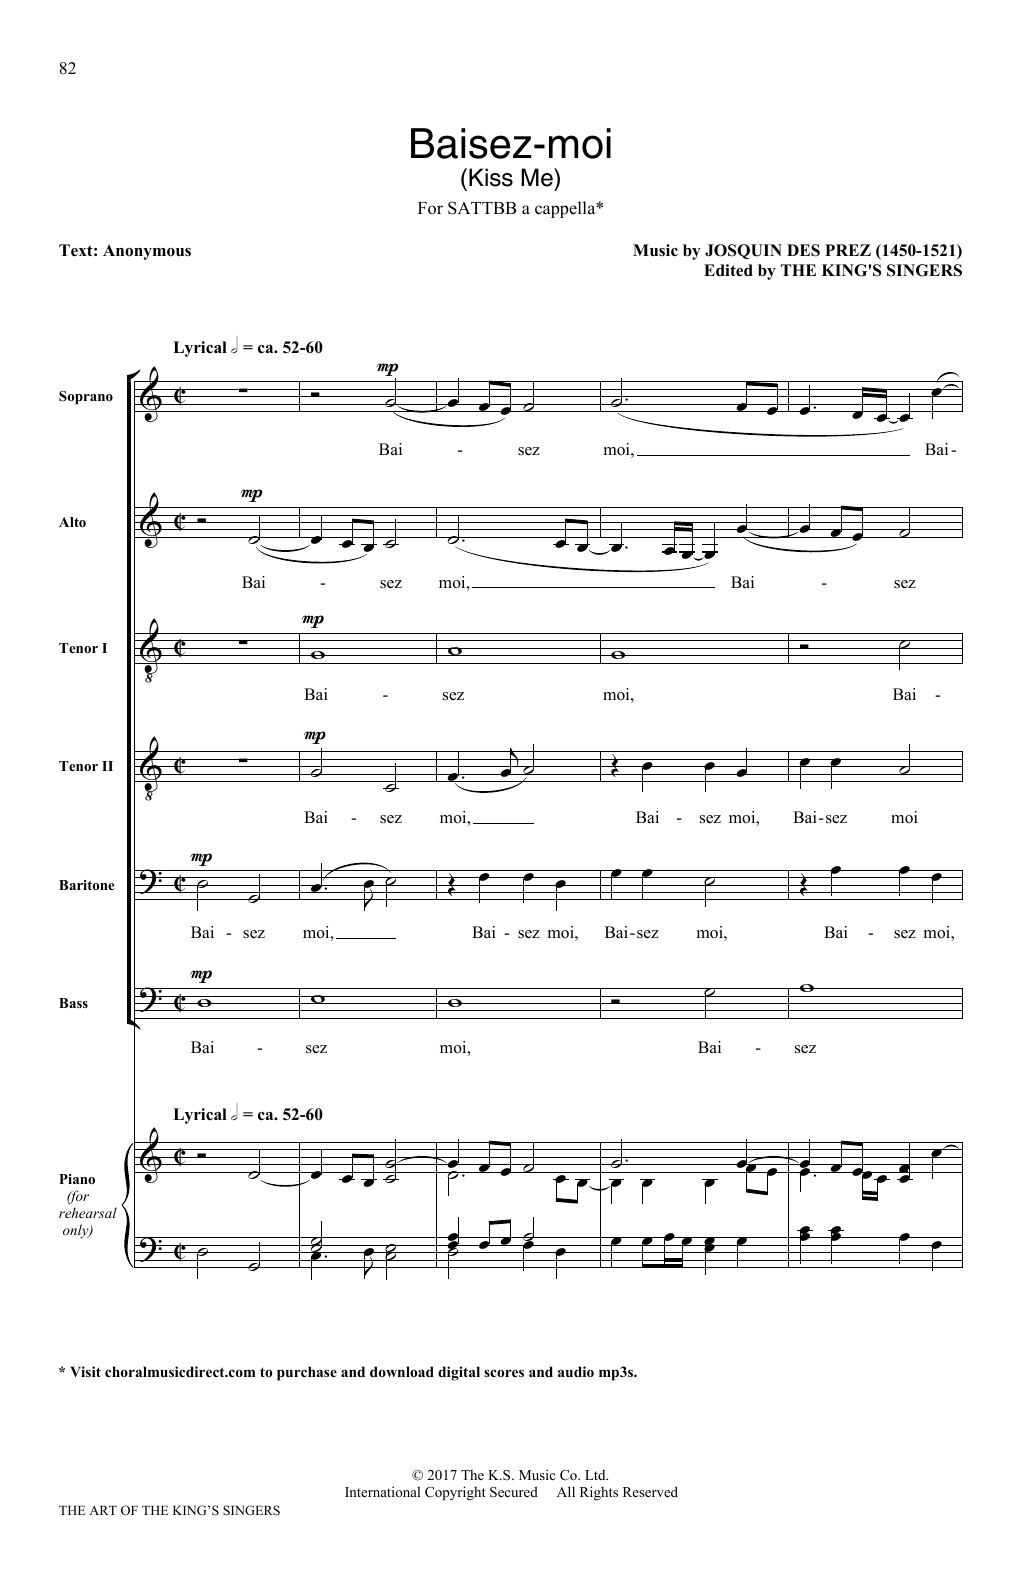 The King's Singers Baisez-moi (Kiss Me) sheet music notes and chords arranged for SATB Choir